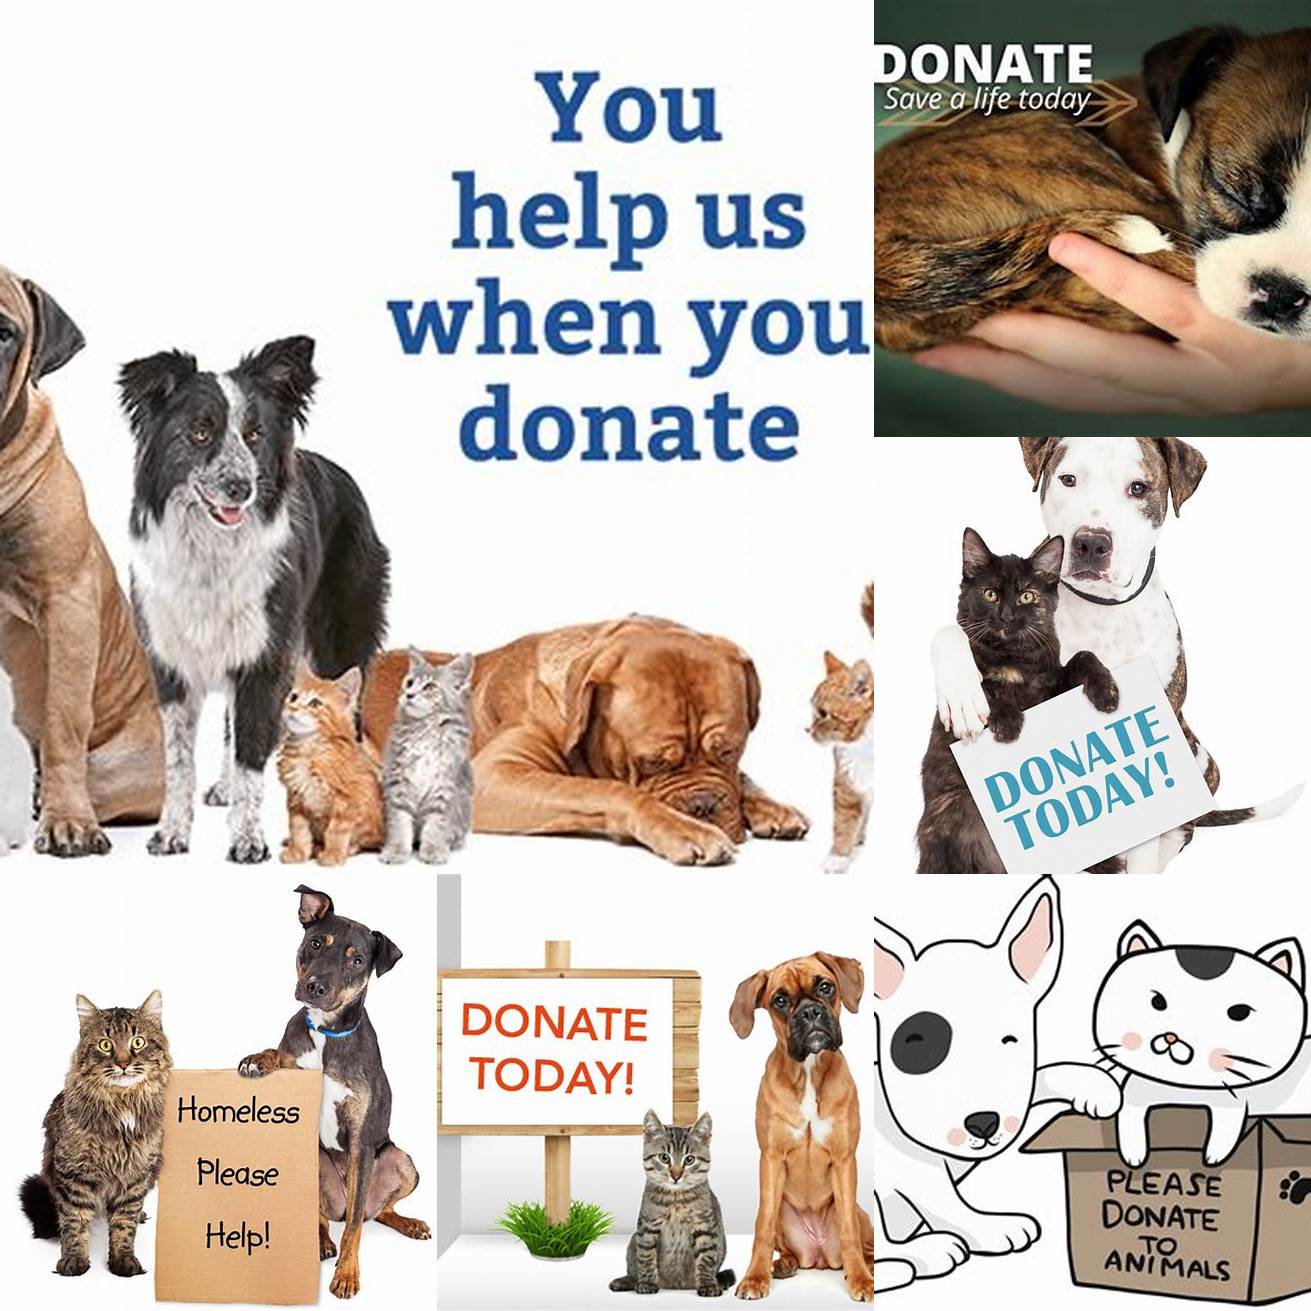 Donate to local animal rescue organizations